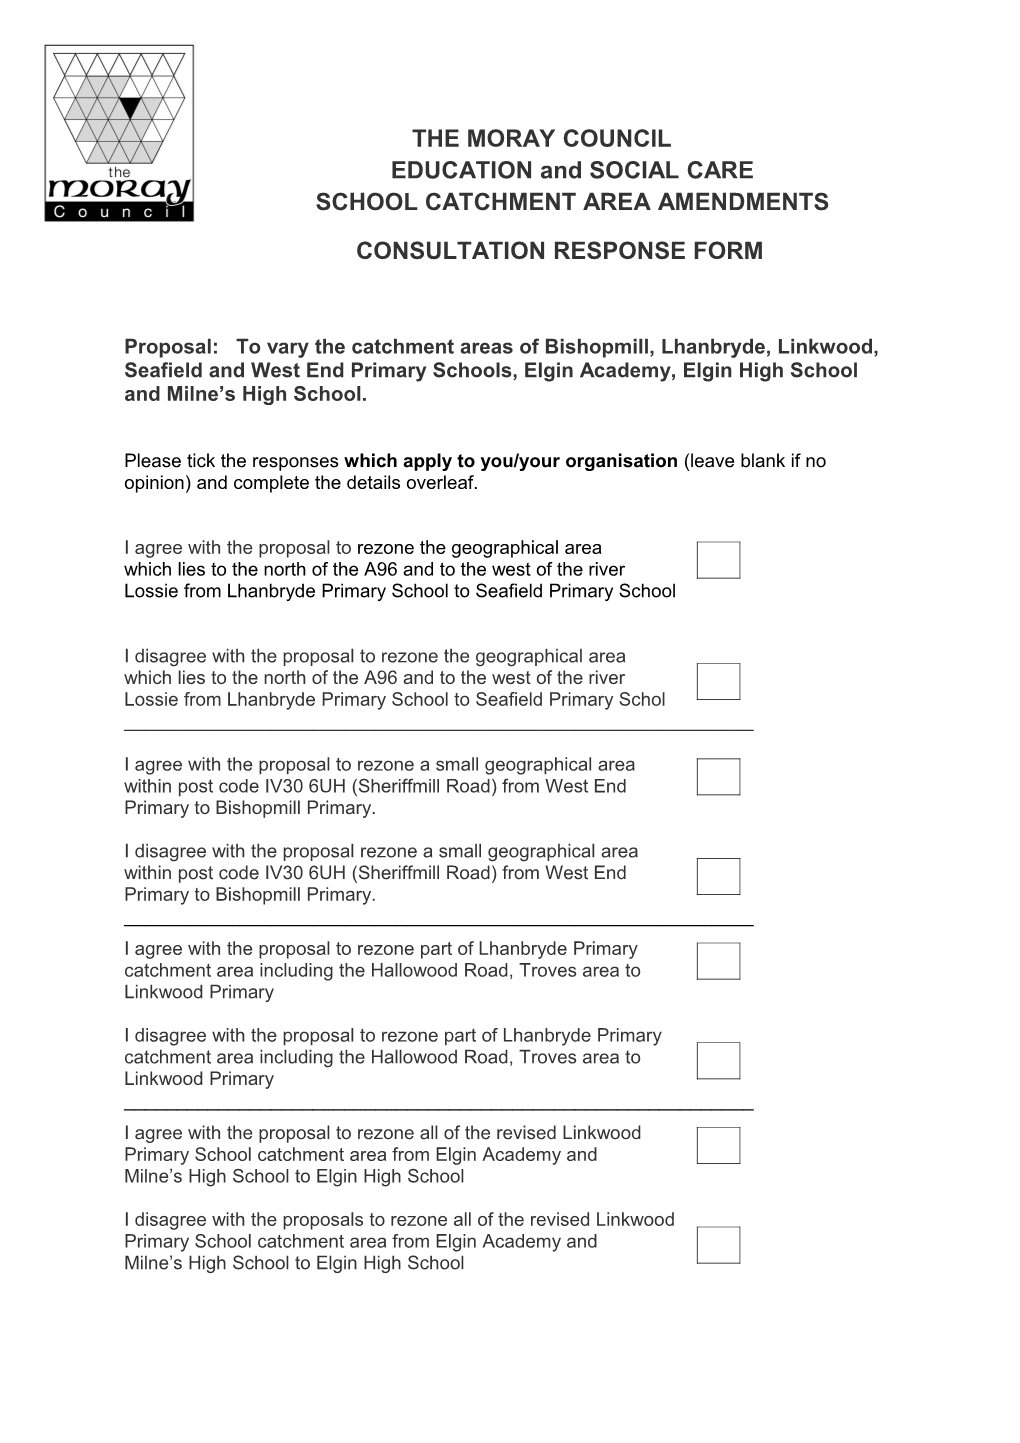 Consultation Response Form s1